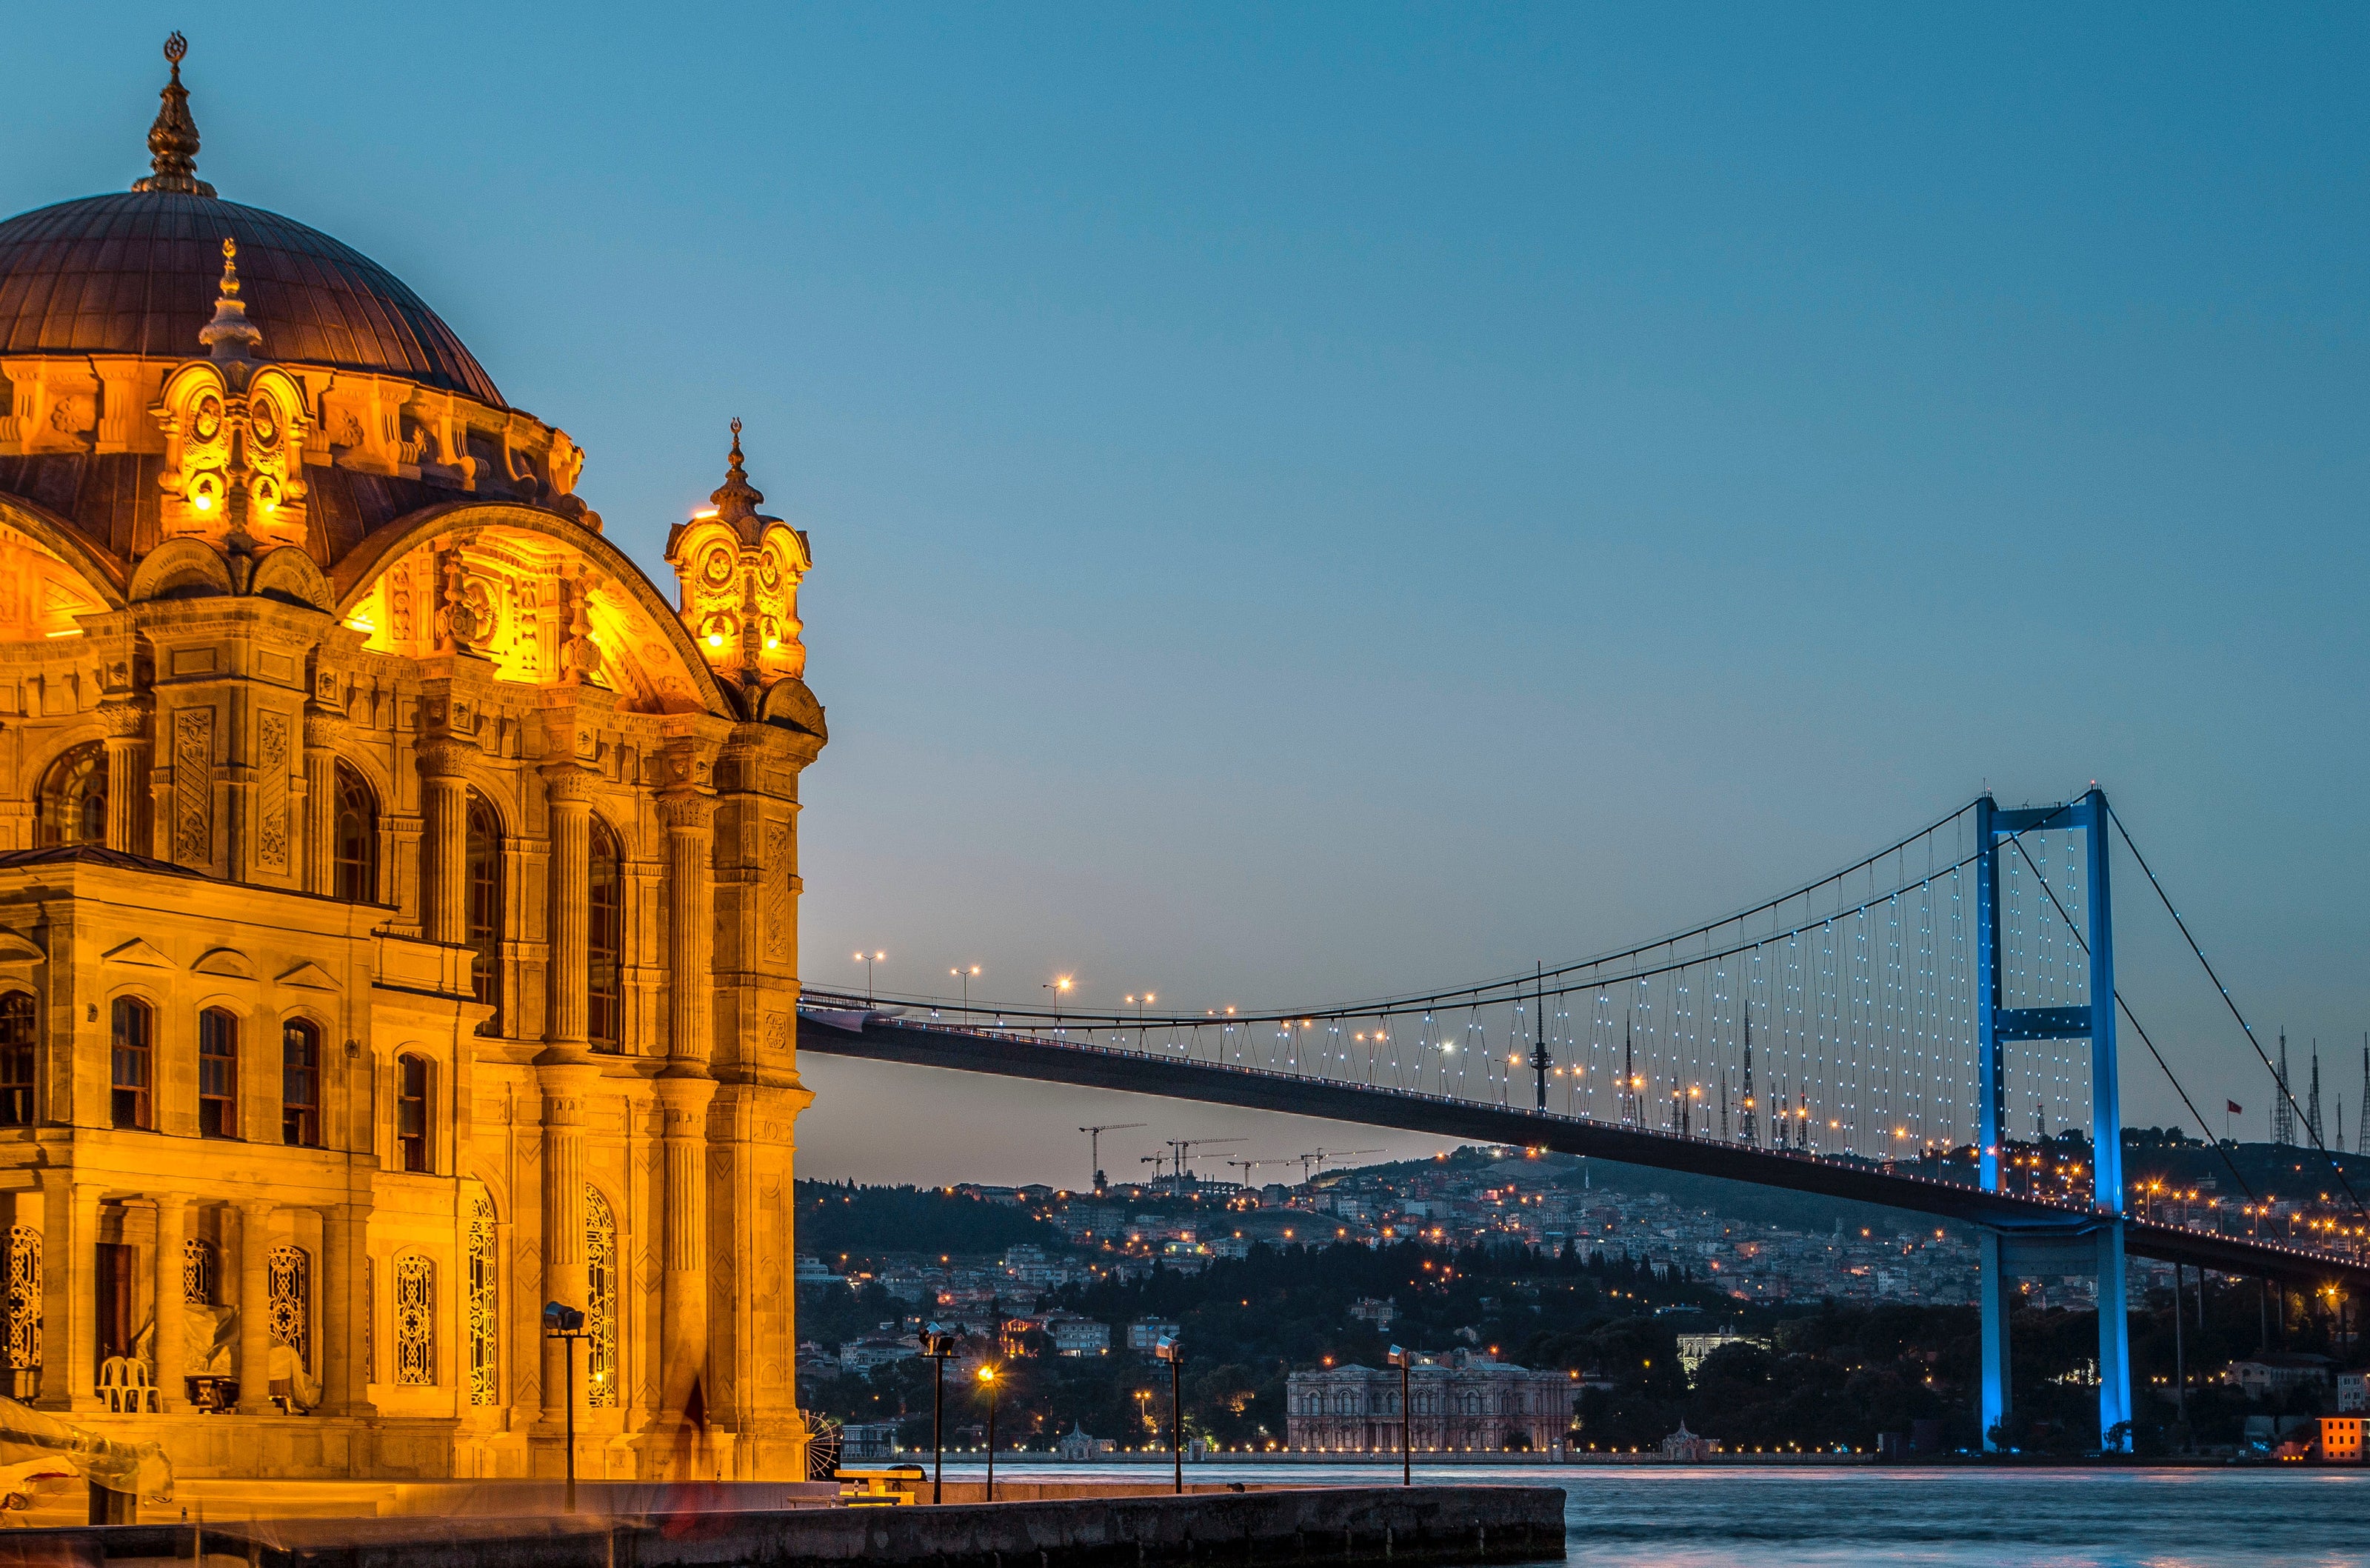 View of Bosphorus Bridge from Ortakoy, Istanbul